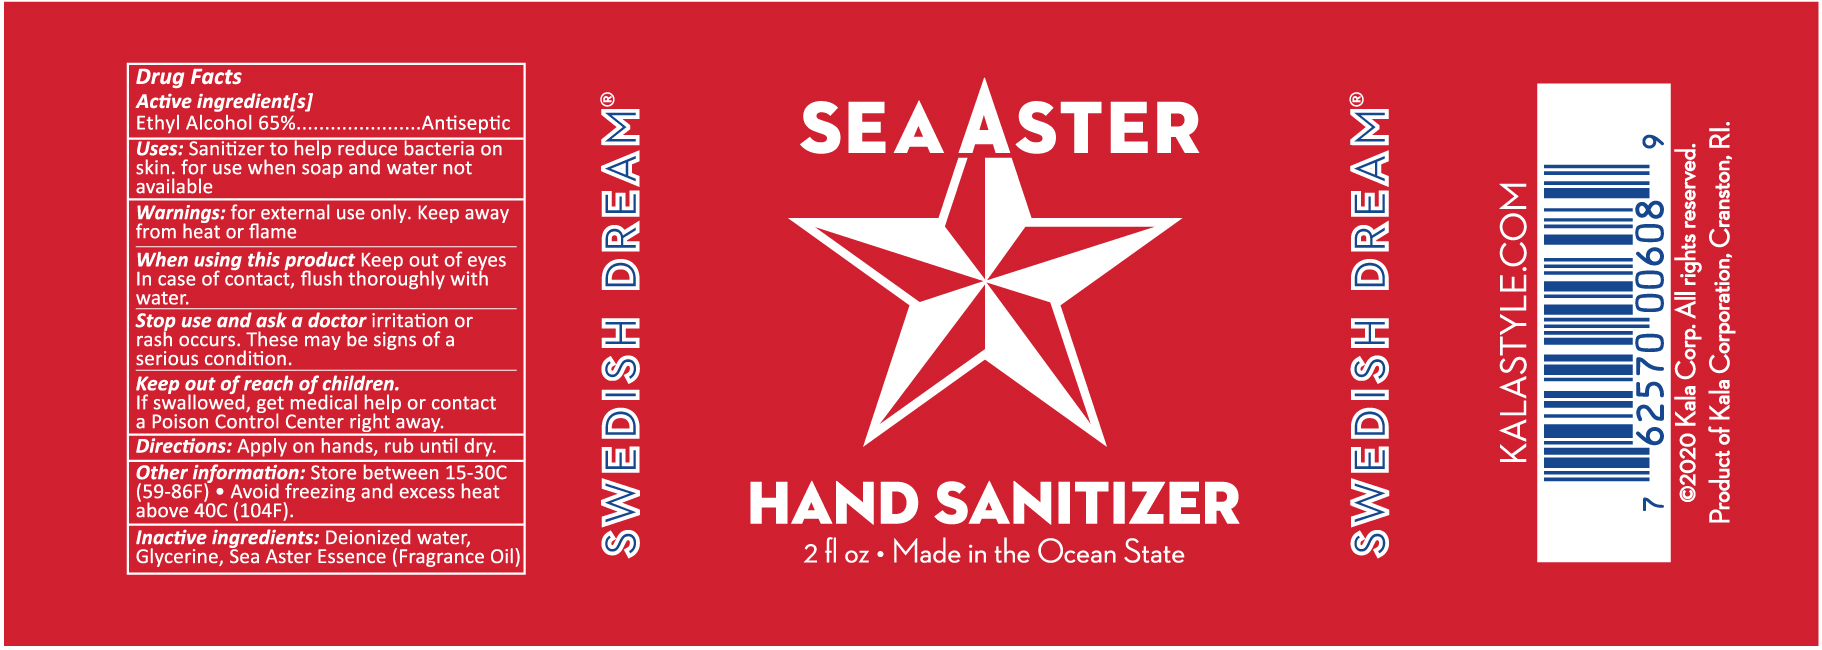 Sea Aster Hand Sanitizer